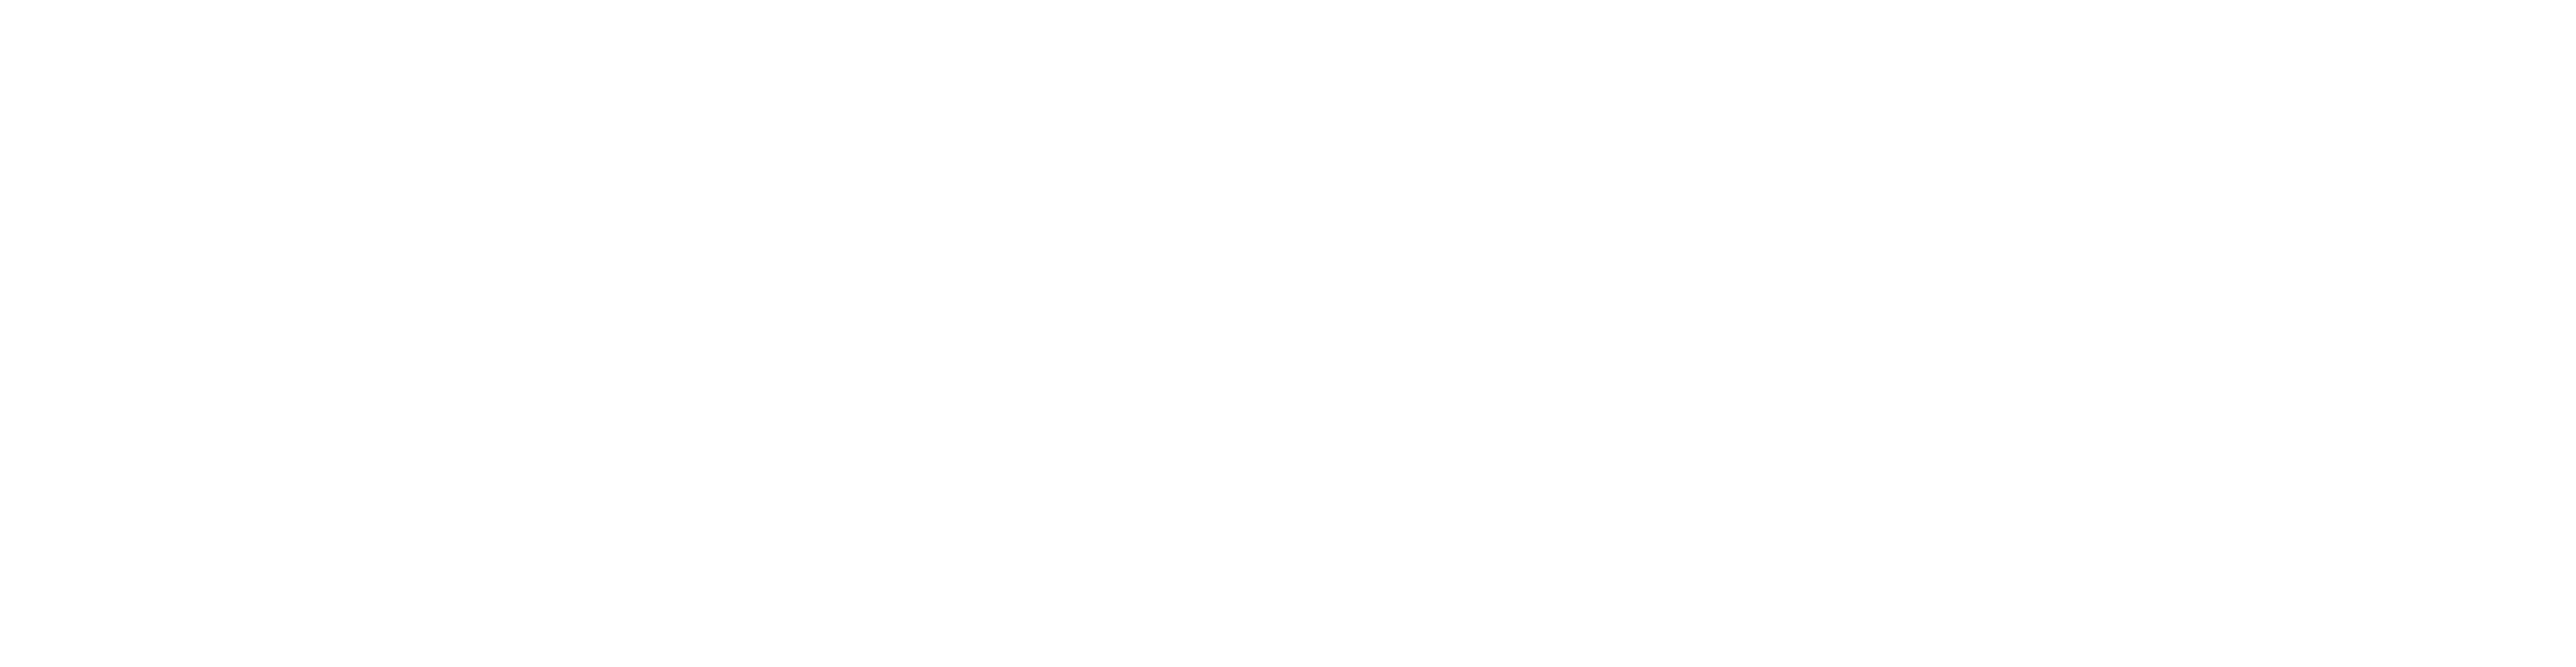 CBC_Logo_withwordmark_Horizontal_reverse